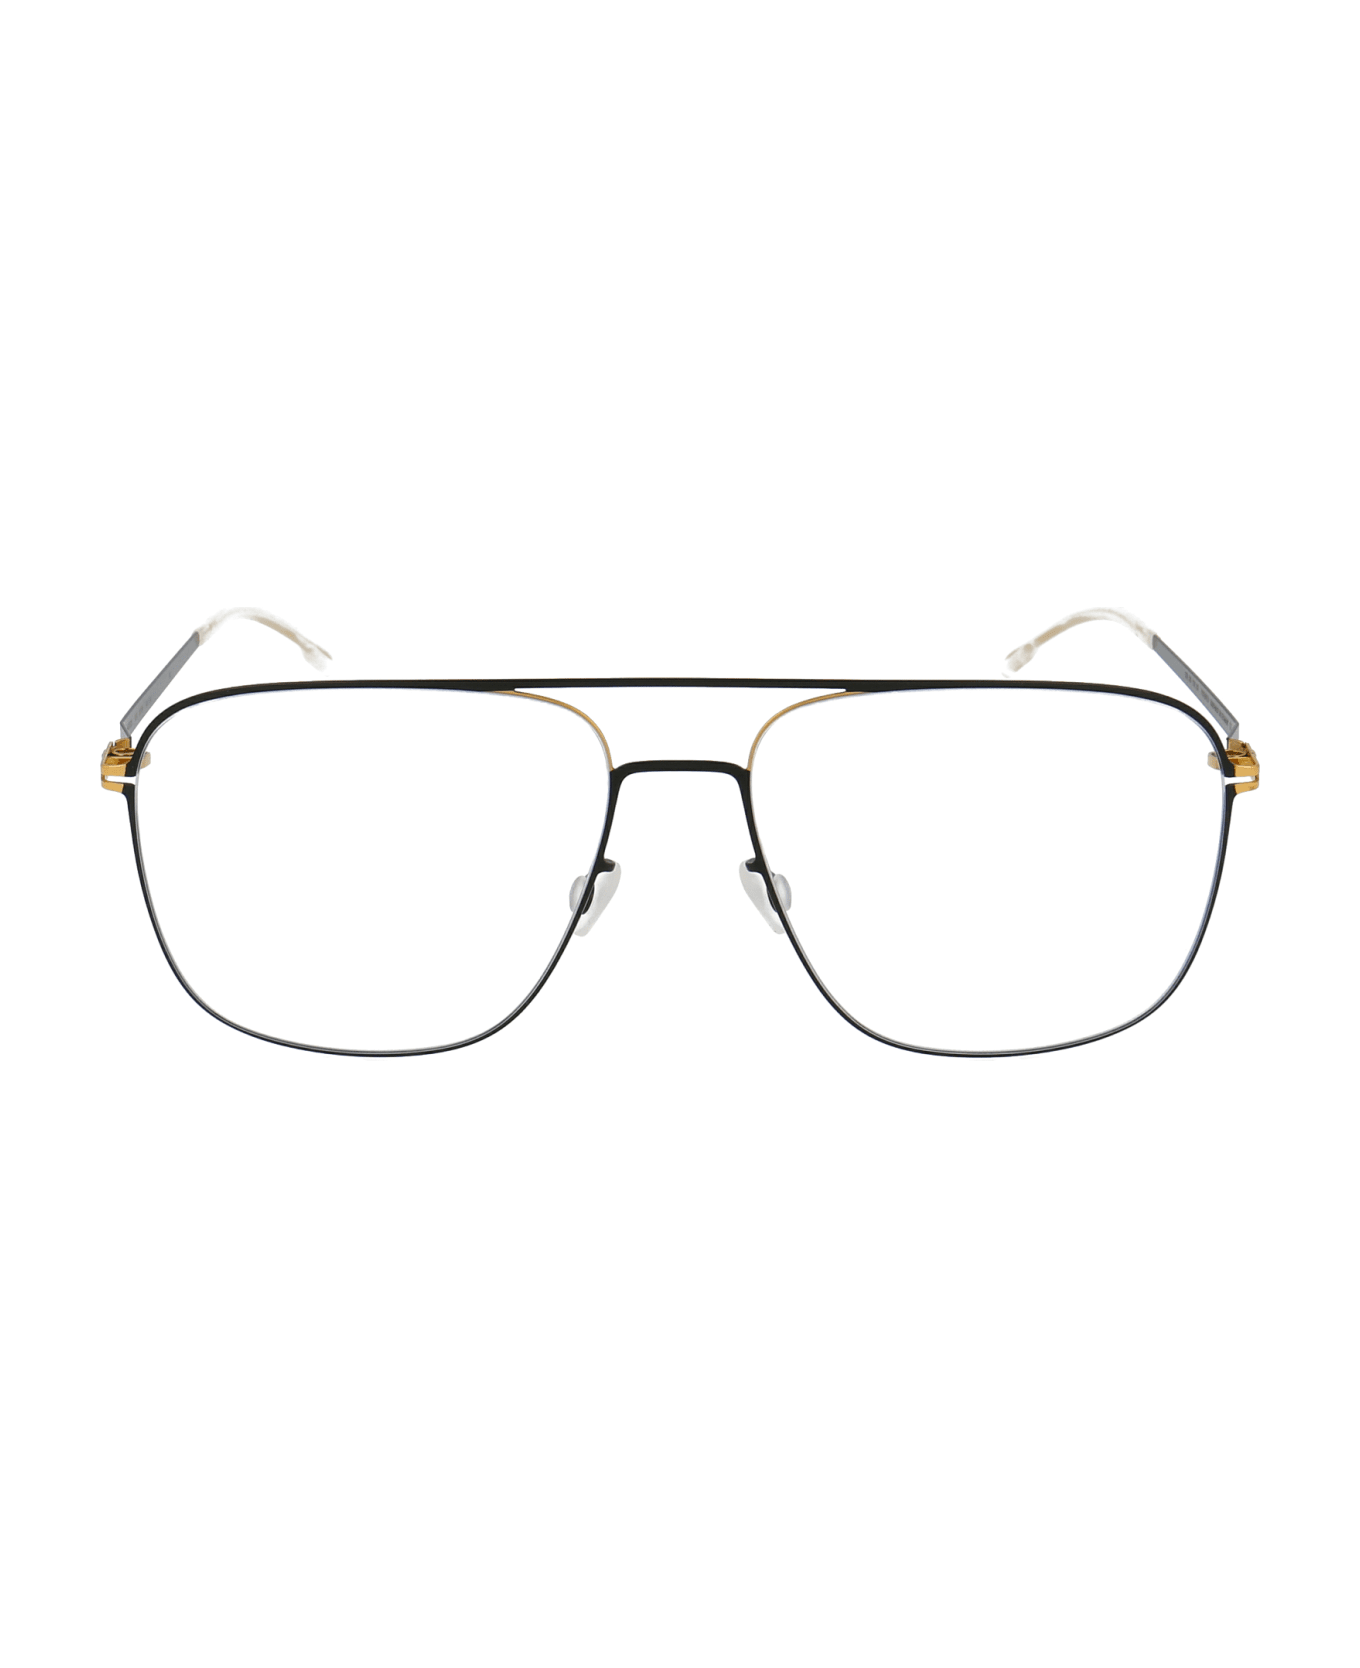 Mykita Steen Glasses - 167 Gold/Jet Black Clear